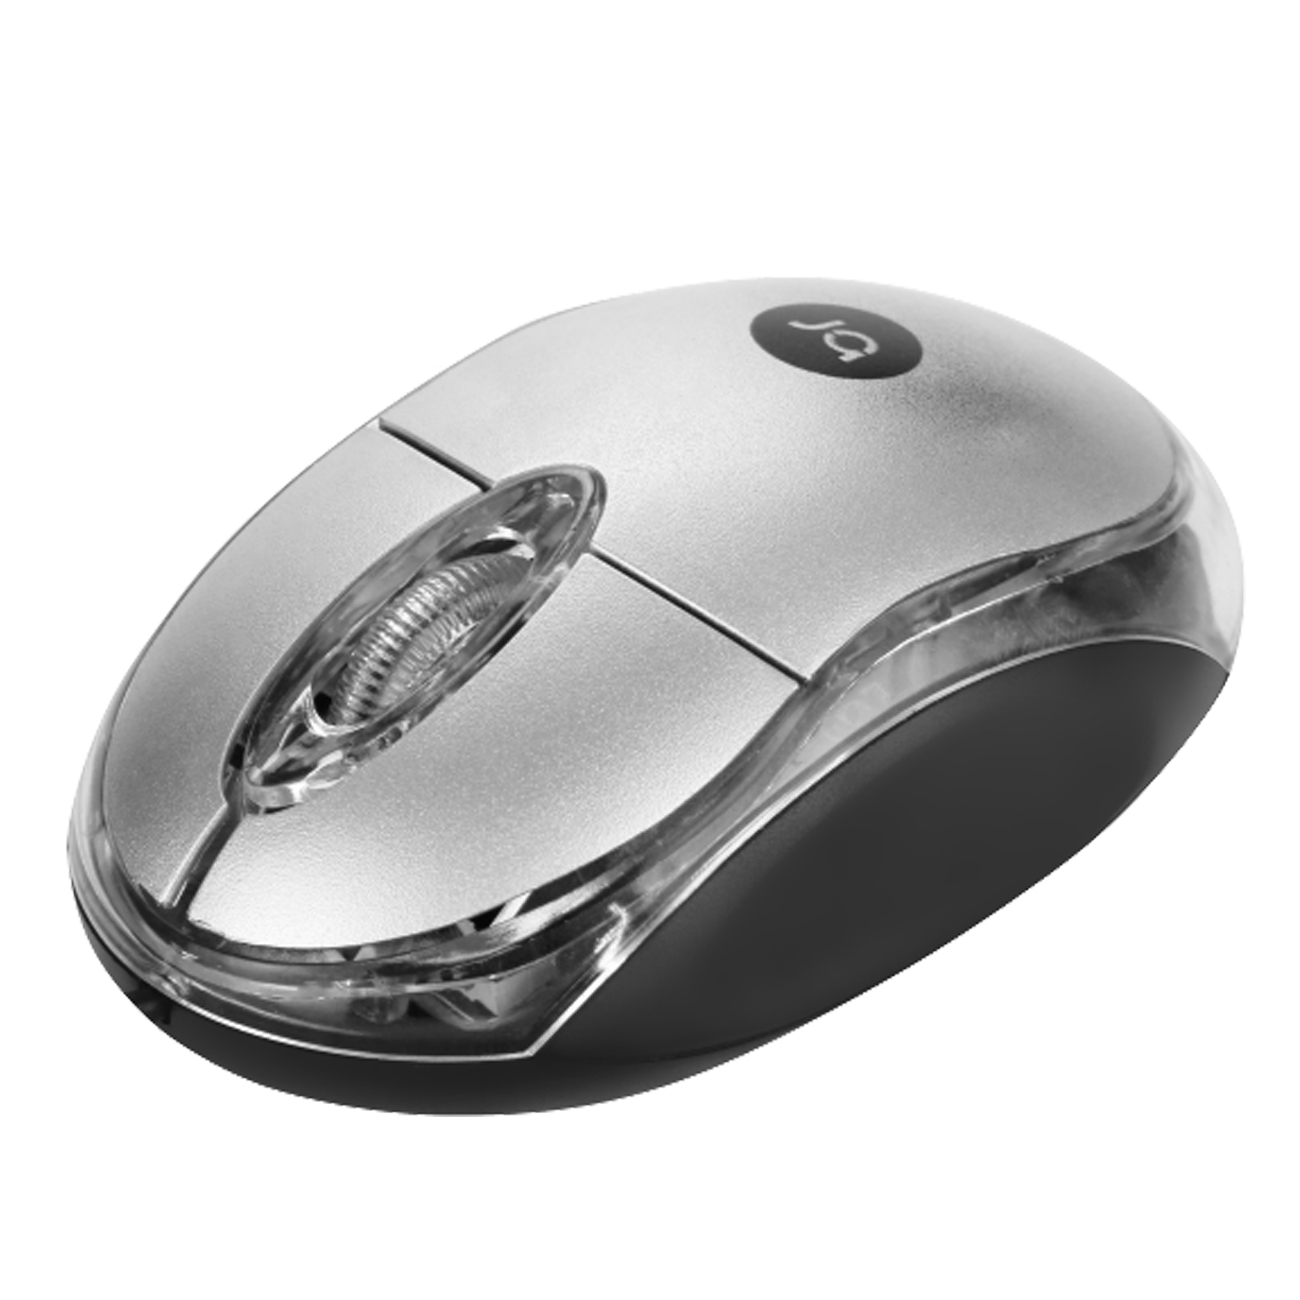 Kit Combo Office Mouse Óptico 800Dpi e Teclado Abnt2 Simples  - BRIGHT